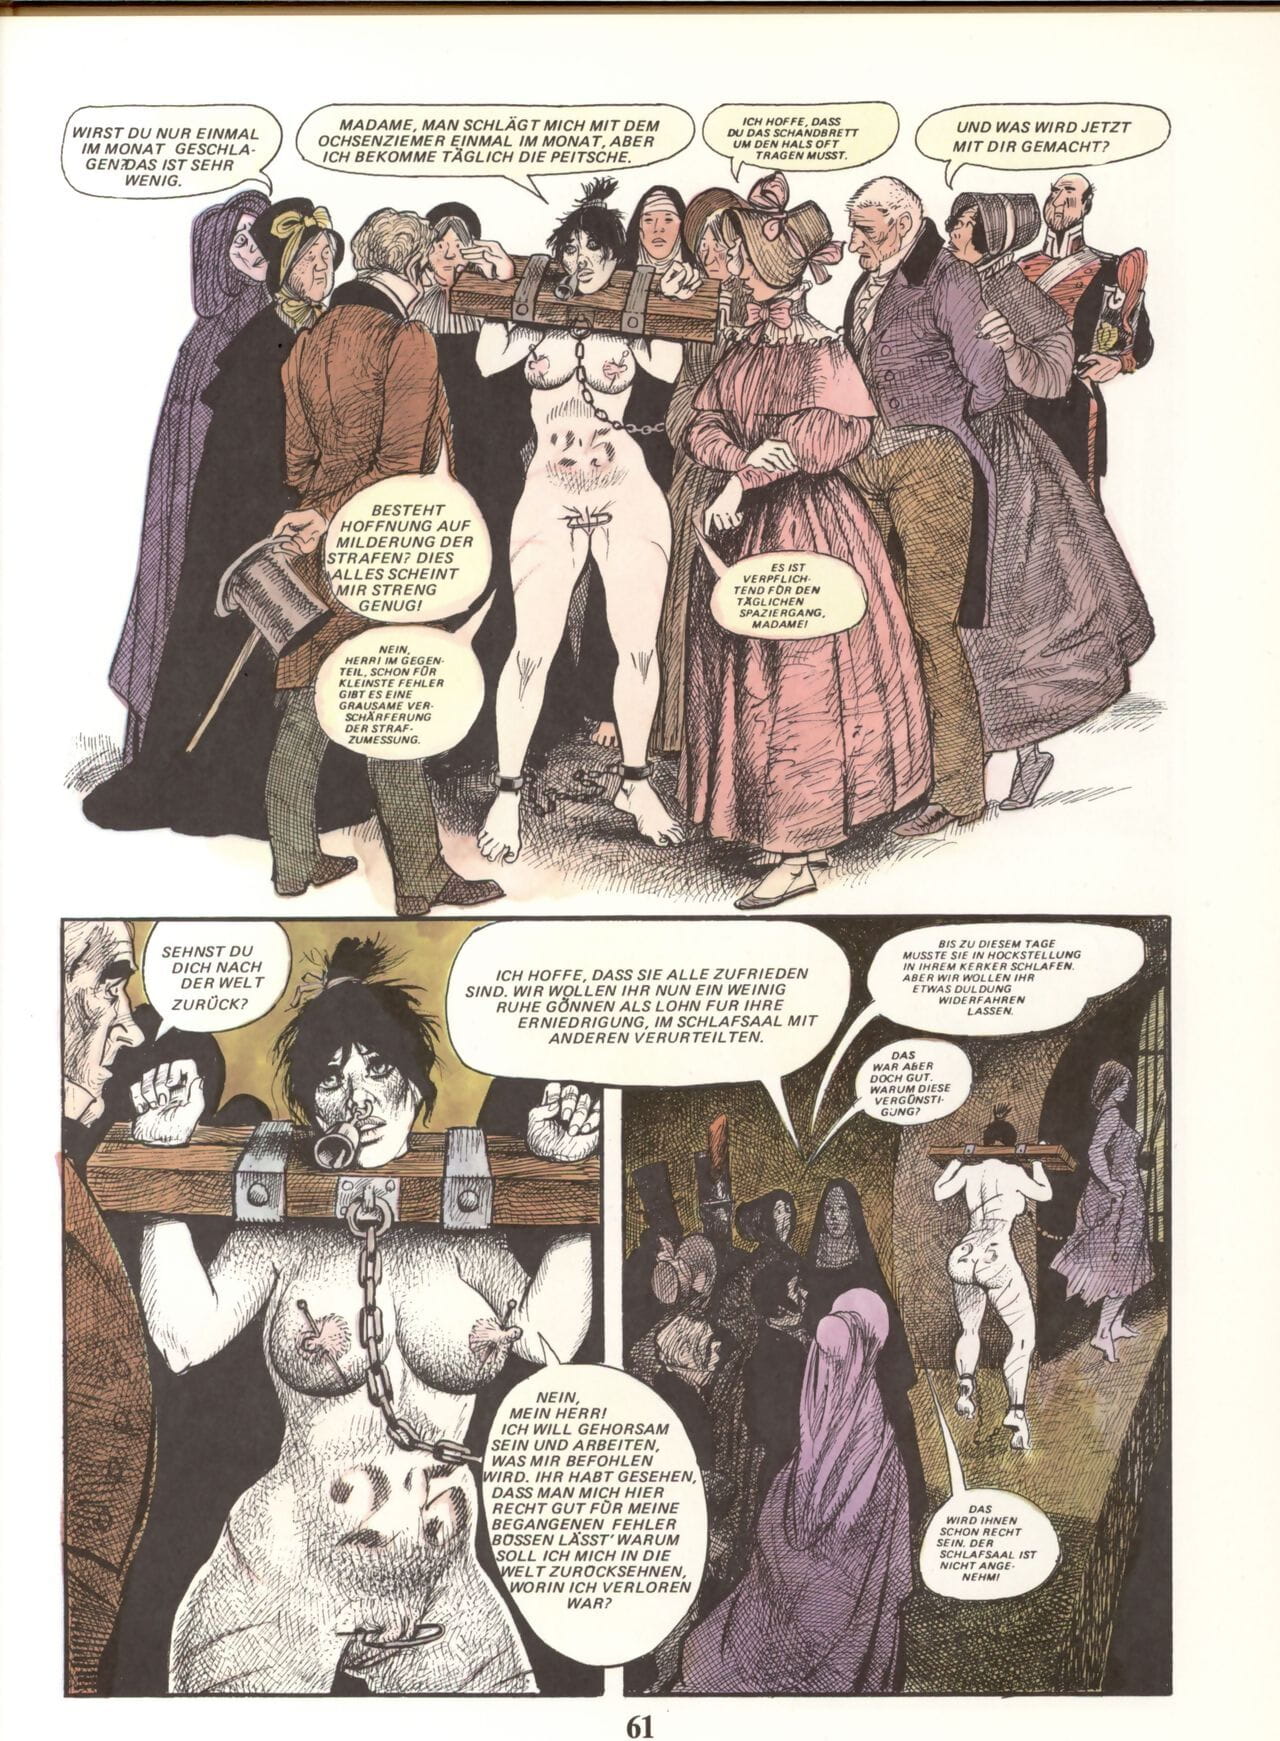 Marie Gabriel De St eutropa #02 część 5 page 1